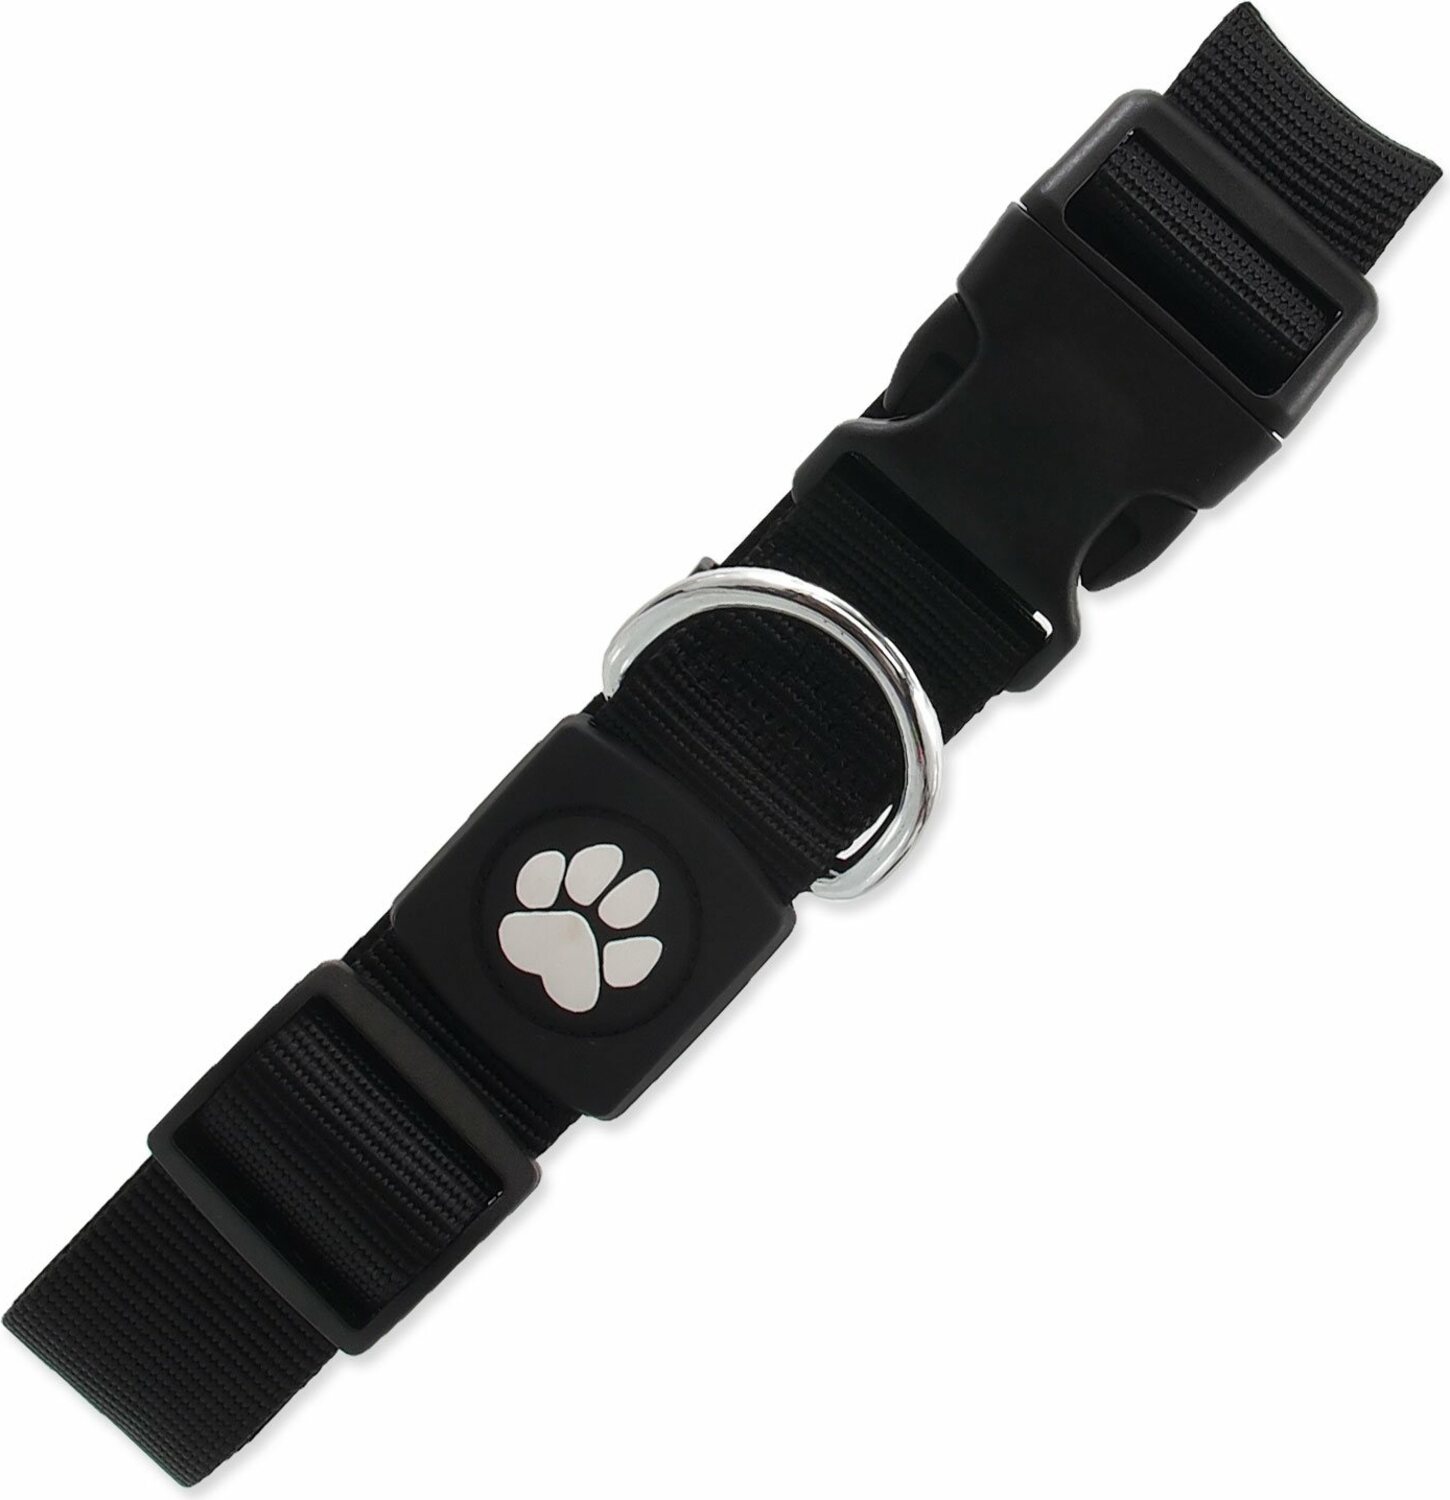 Obojek Active Dog Premium XL černý 3,8x51-78cm